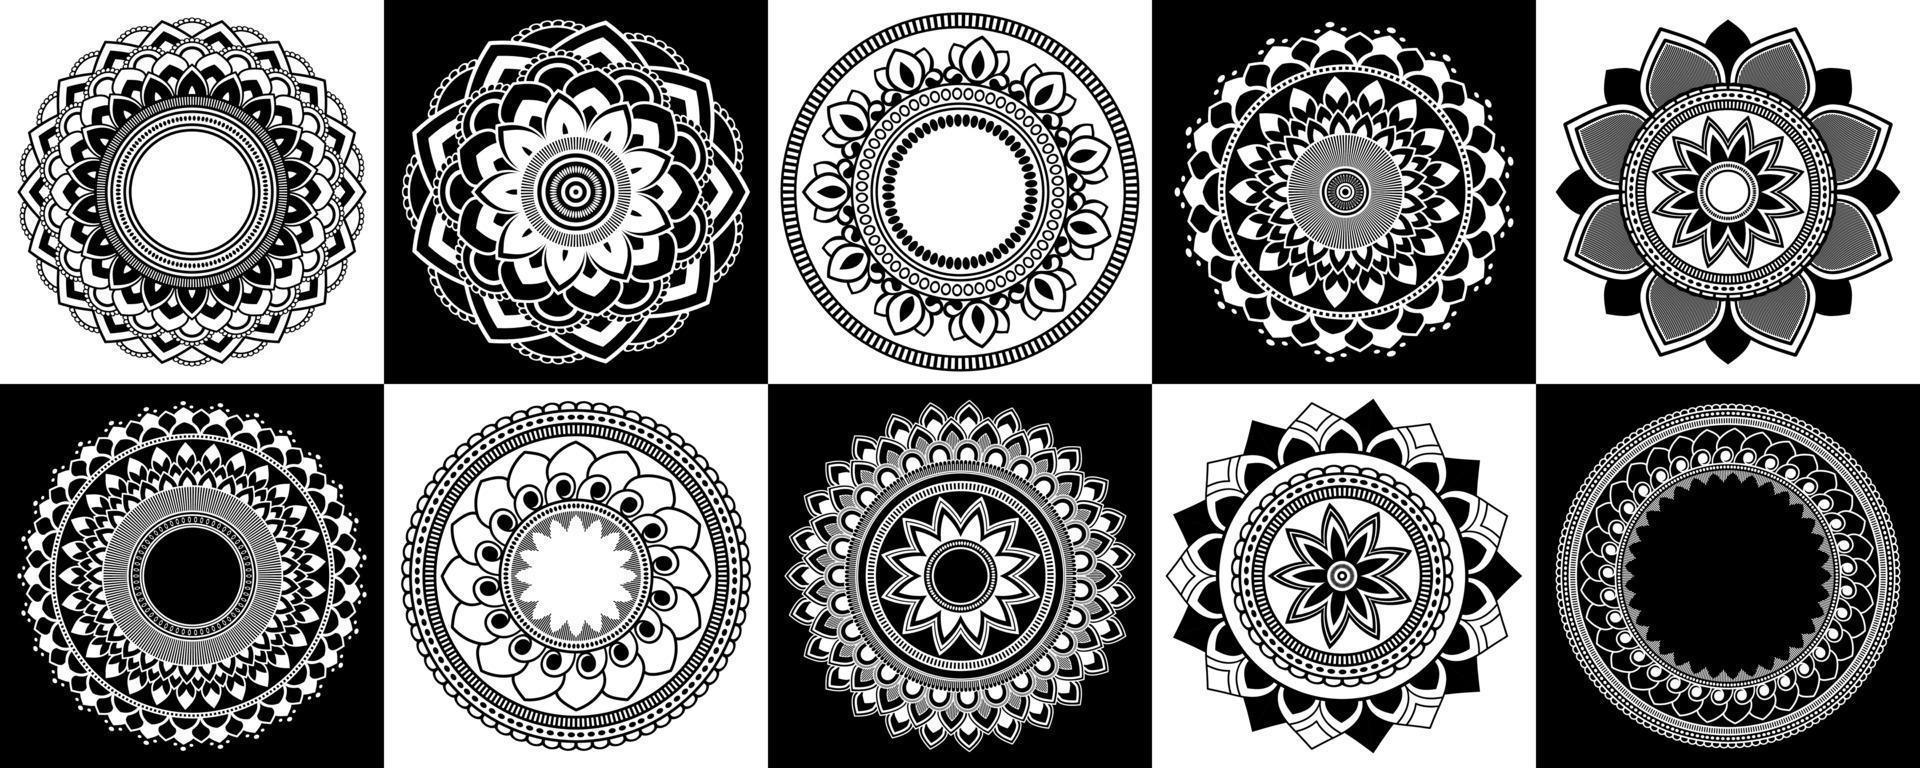 conjunto de mandalas zentangle, mandala para henna, mehendi, tatuaje, elementos ornamentales étnicos decorativos, patrones orientales vector